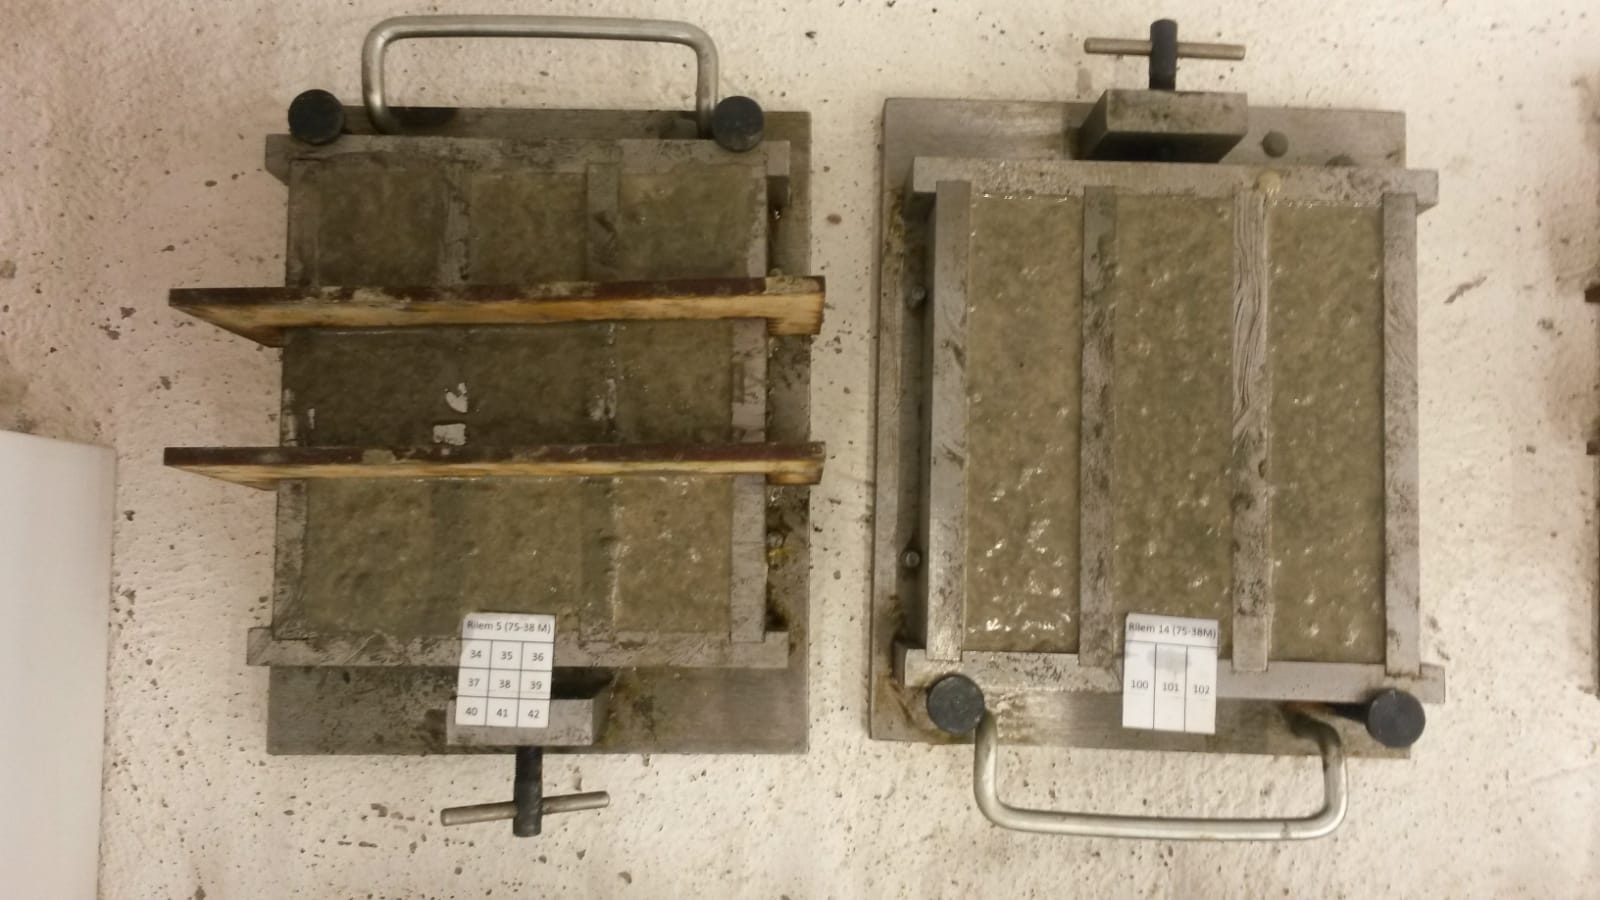 Investigación académica distinguida por ANID desarrollará cementos verdes en base a relaves de escoria de cobre